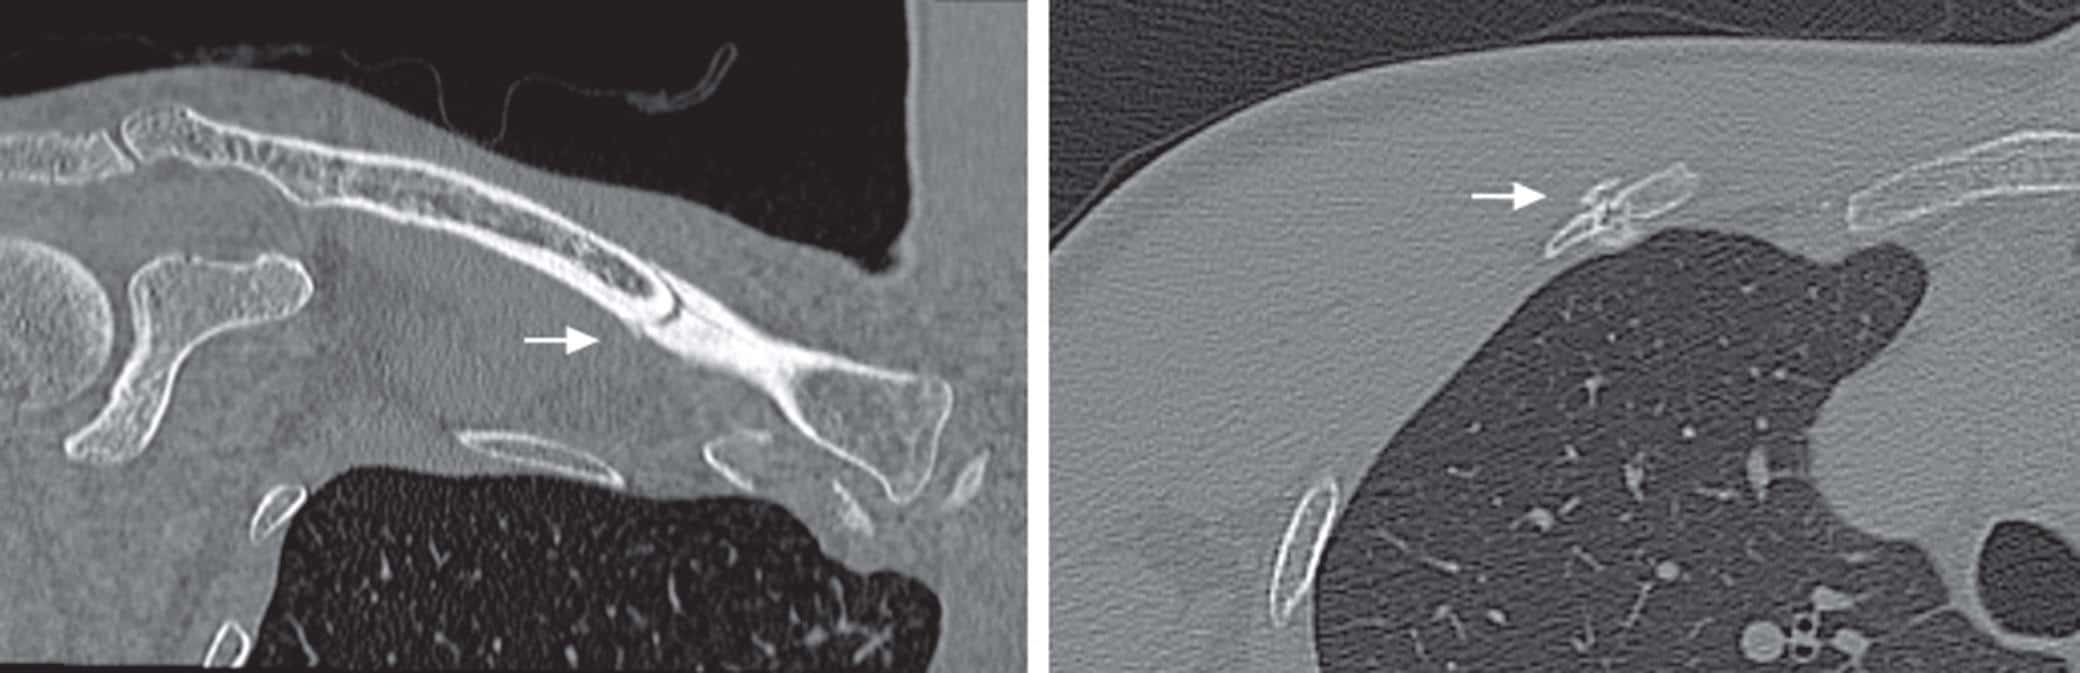 Figura 2. — tomografia computorizada que mostra a clavícula e a fratura da segunda costela a) visão coronal que mostra a fratura da clavícula; b) visão axial que mostra a se a fratura da costela.